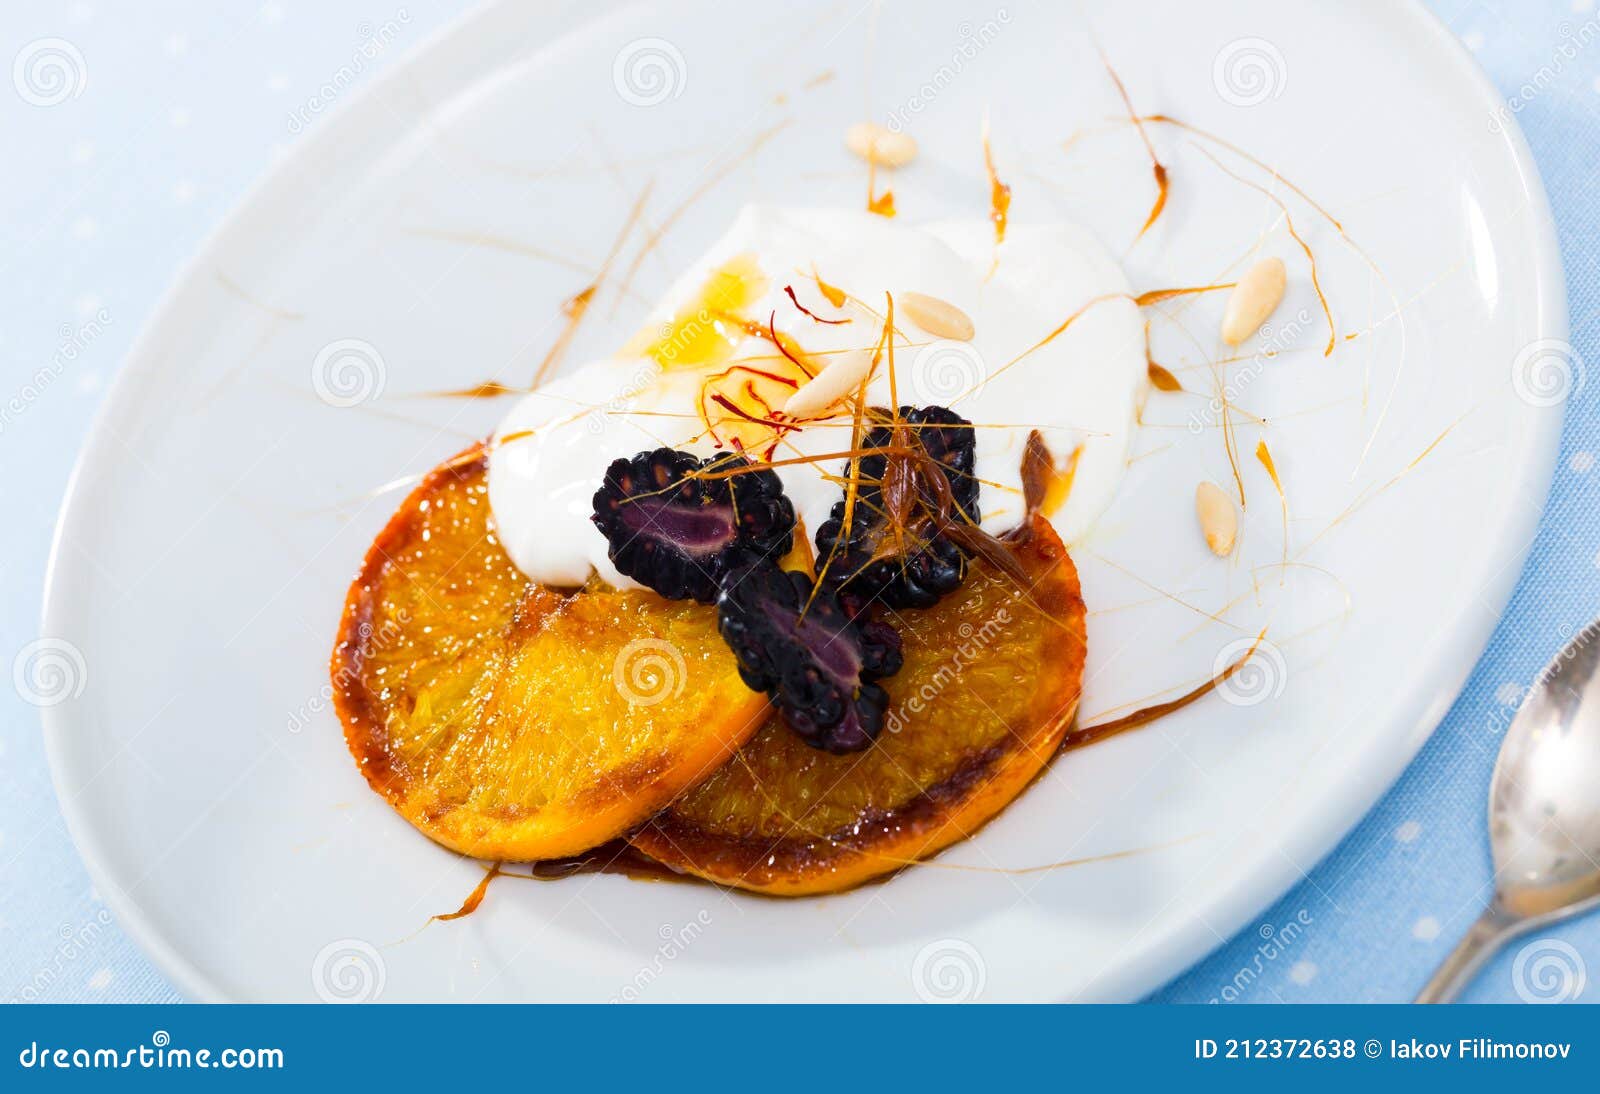 dessert with caramelized oranges, yogurt, brambleberries